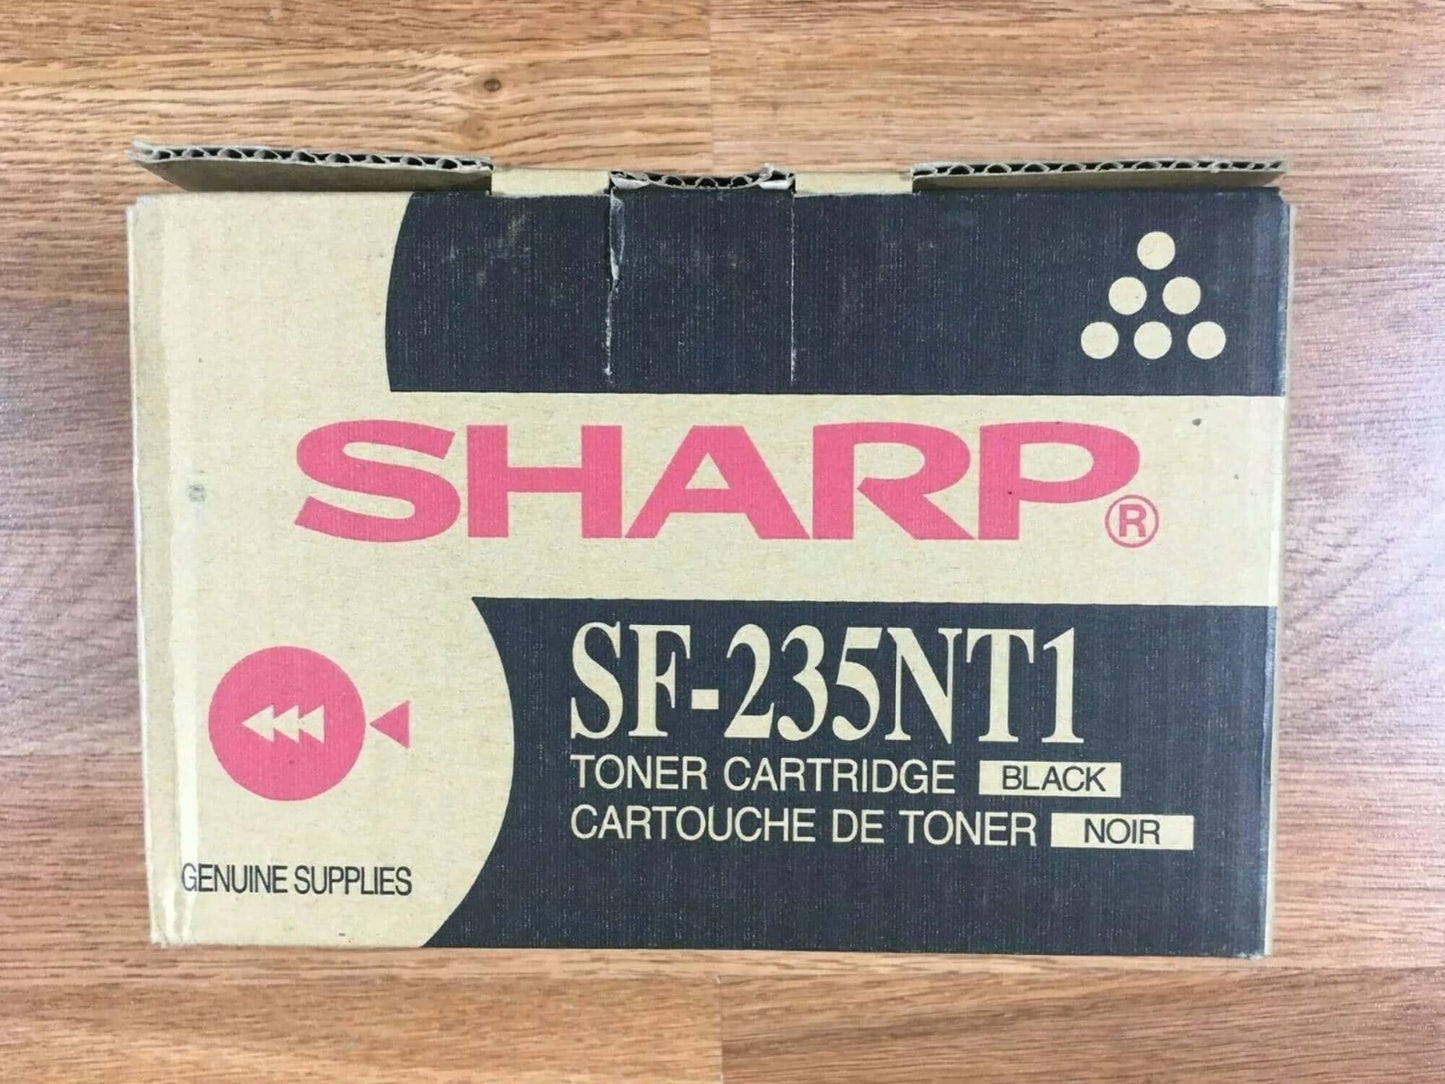 Genuine Sharp SF-235NT1 Black Toner Cartridge Same Day Shipping - copier-clearance-center